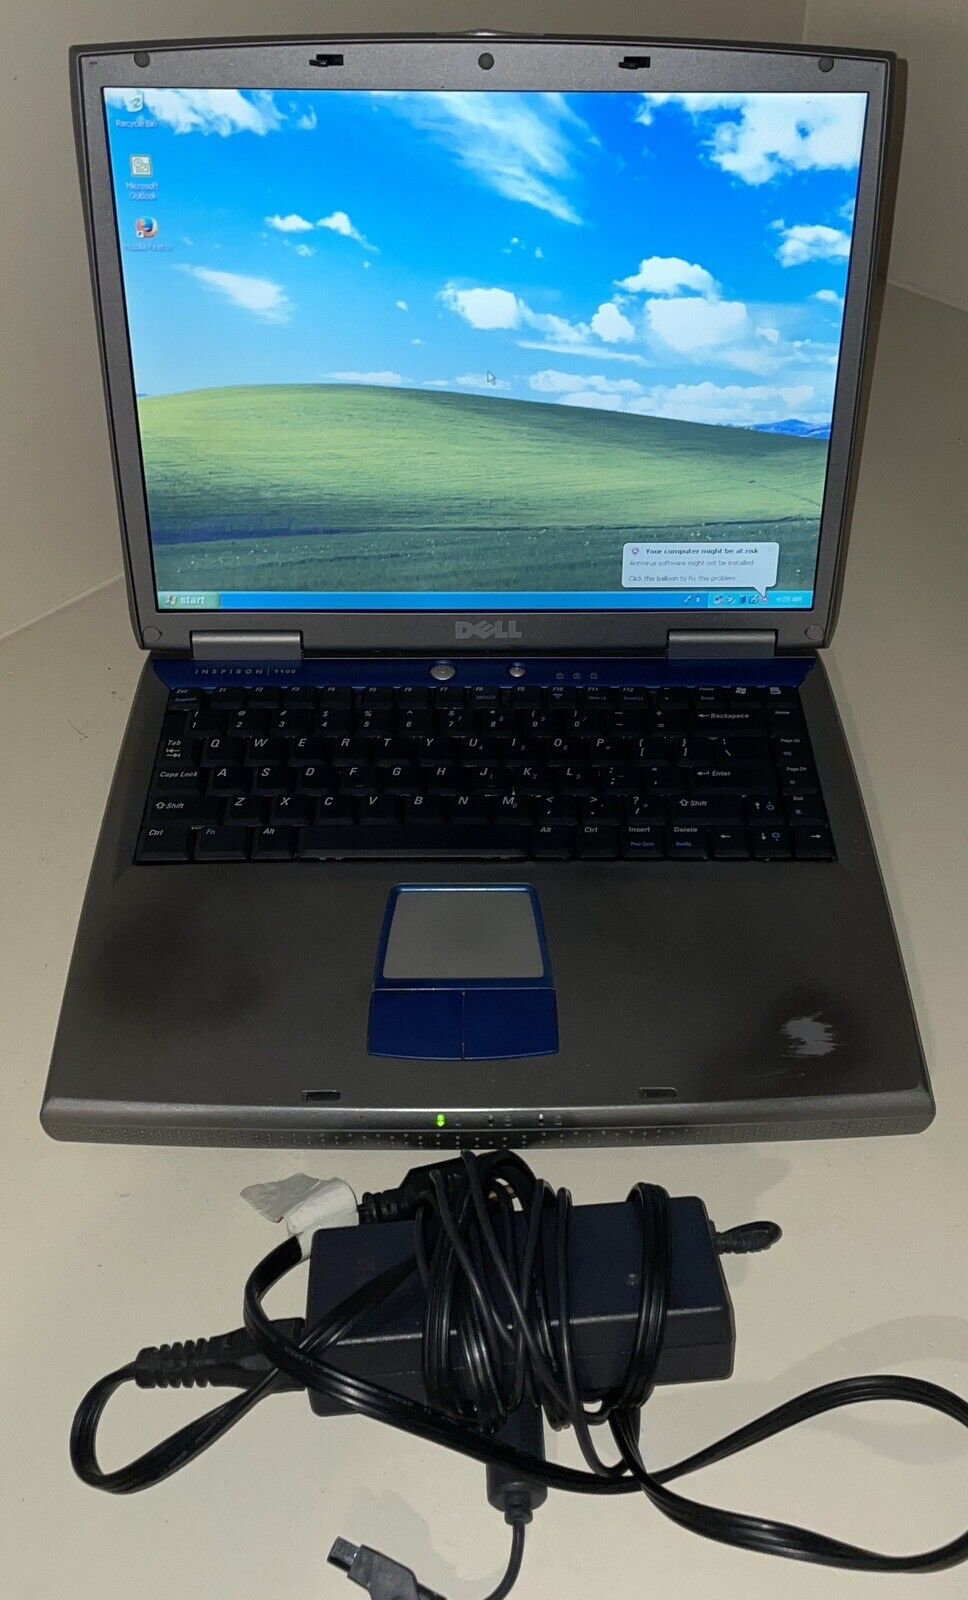 Dell Inspiron 1100 Laptop - Pentium 4 2.4ghz | 256mb RAM | 40gb HDD | Win XP